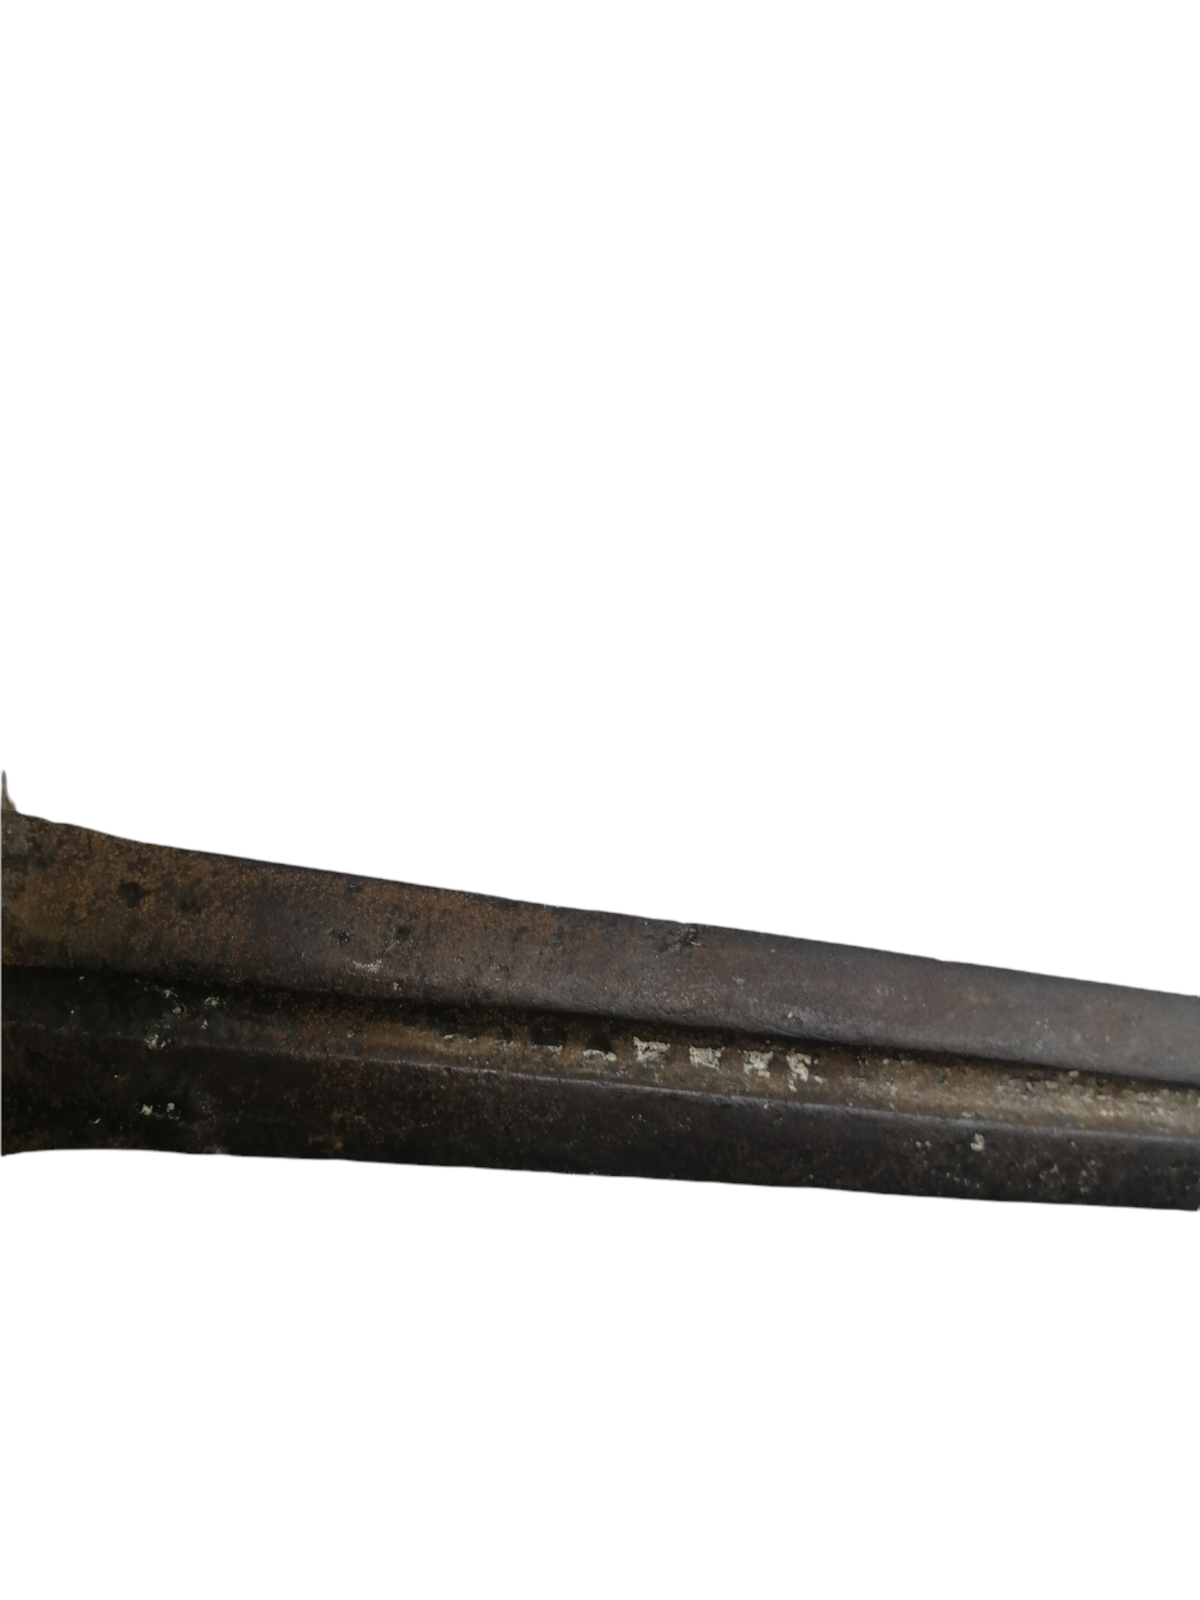 17th Century English Rapier with composite handle.